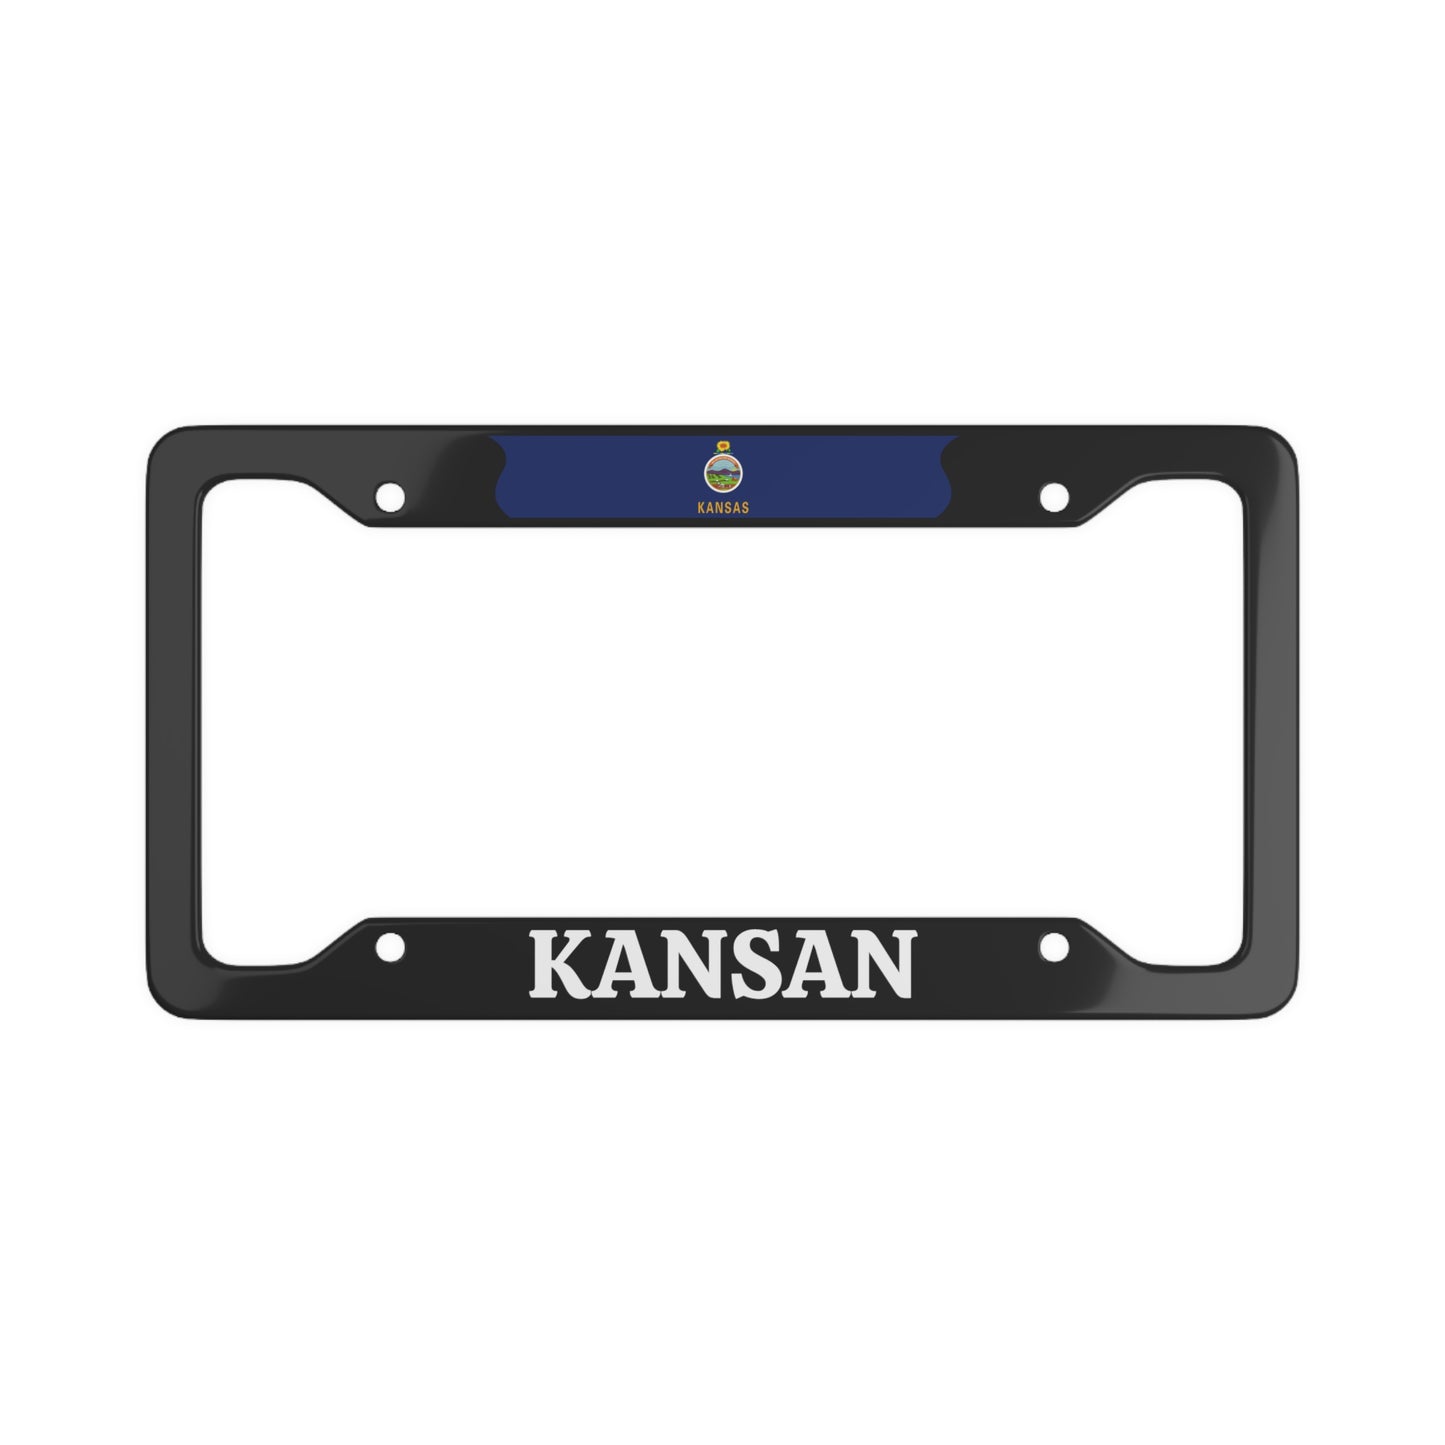 Kansan, Kansas State, USA License Plate Frame